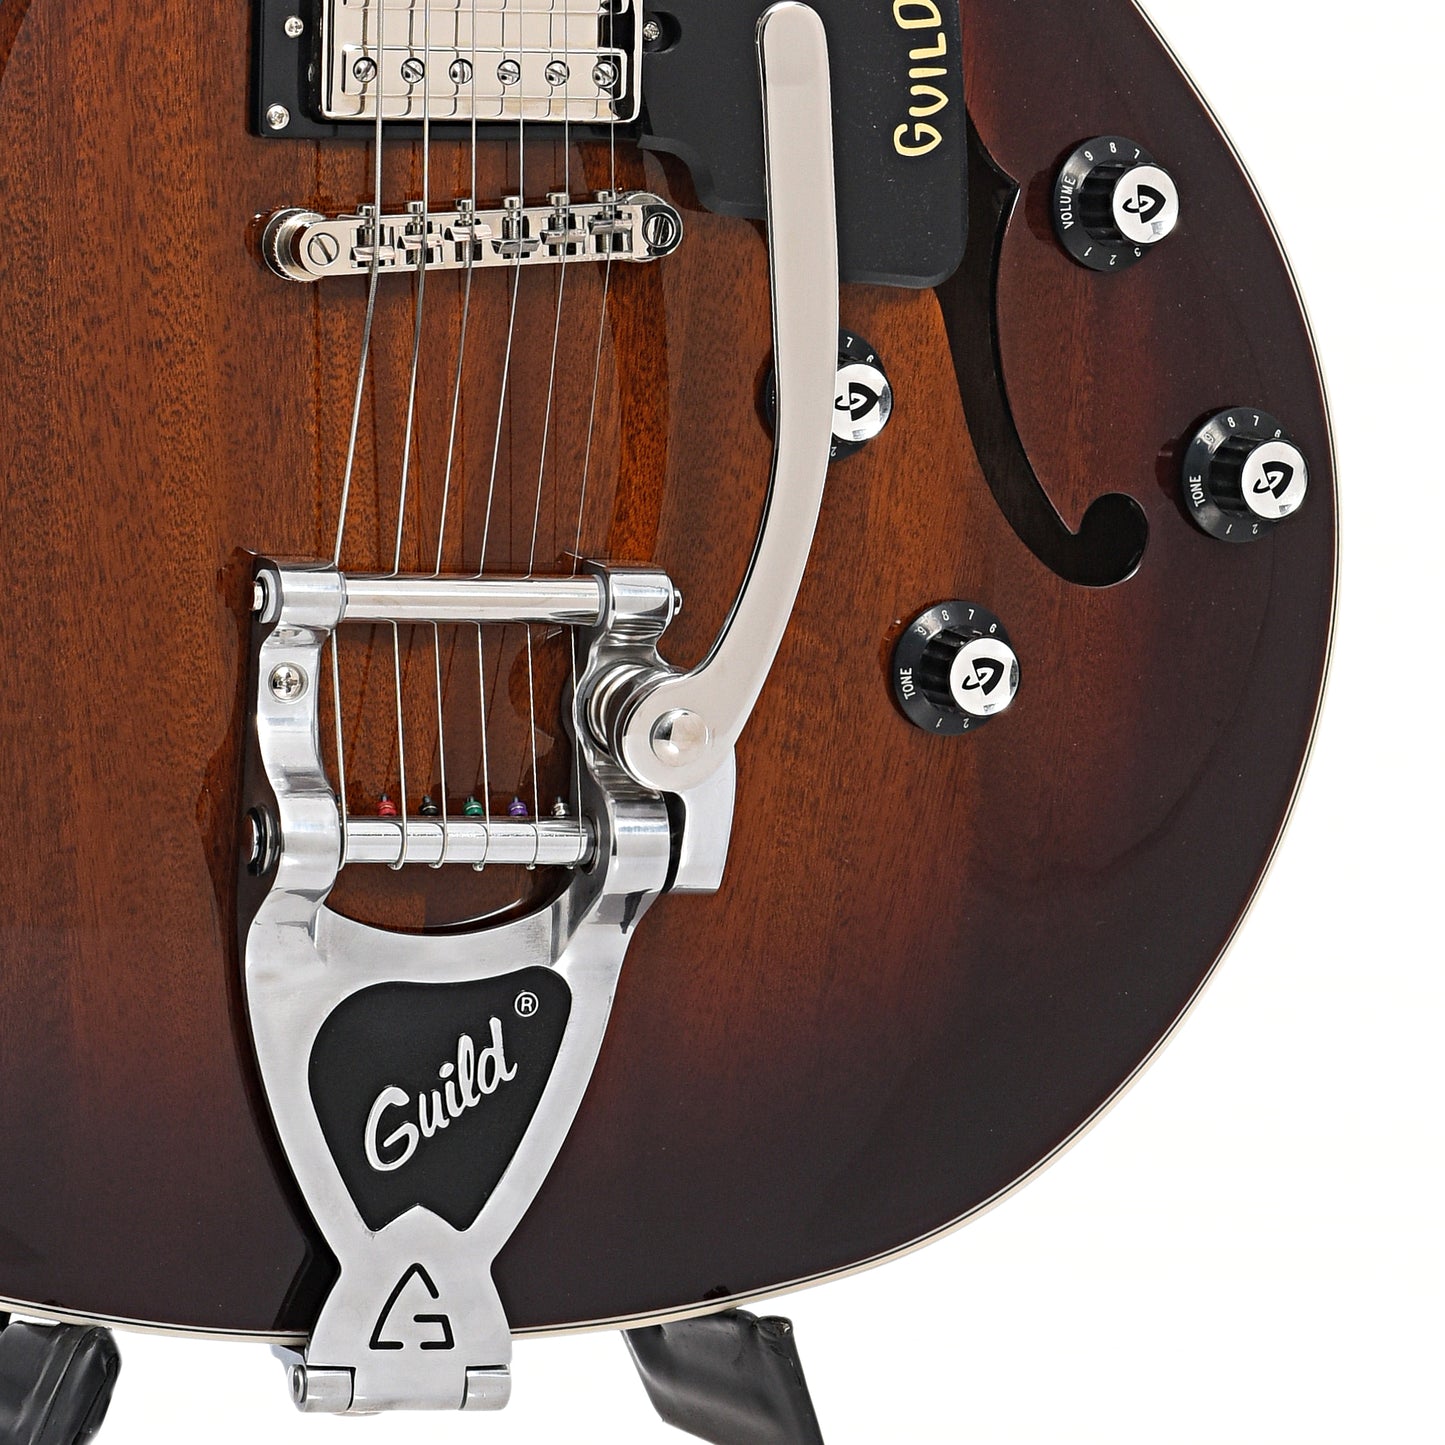 Tailpiece tremolo arm, controls and bridge of Guild Starfire I Double Cutaway Semi-Hollow Body Guitar with GVT, California Burst